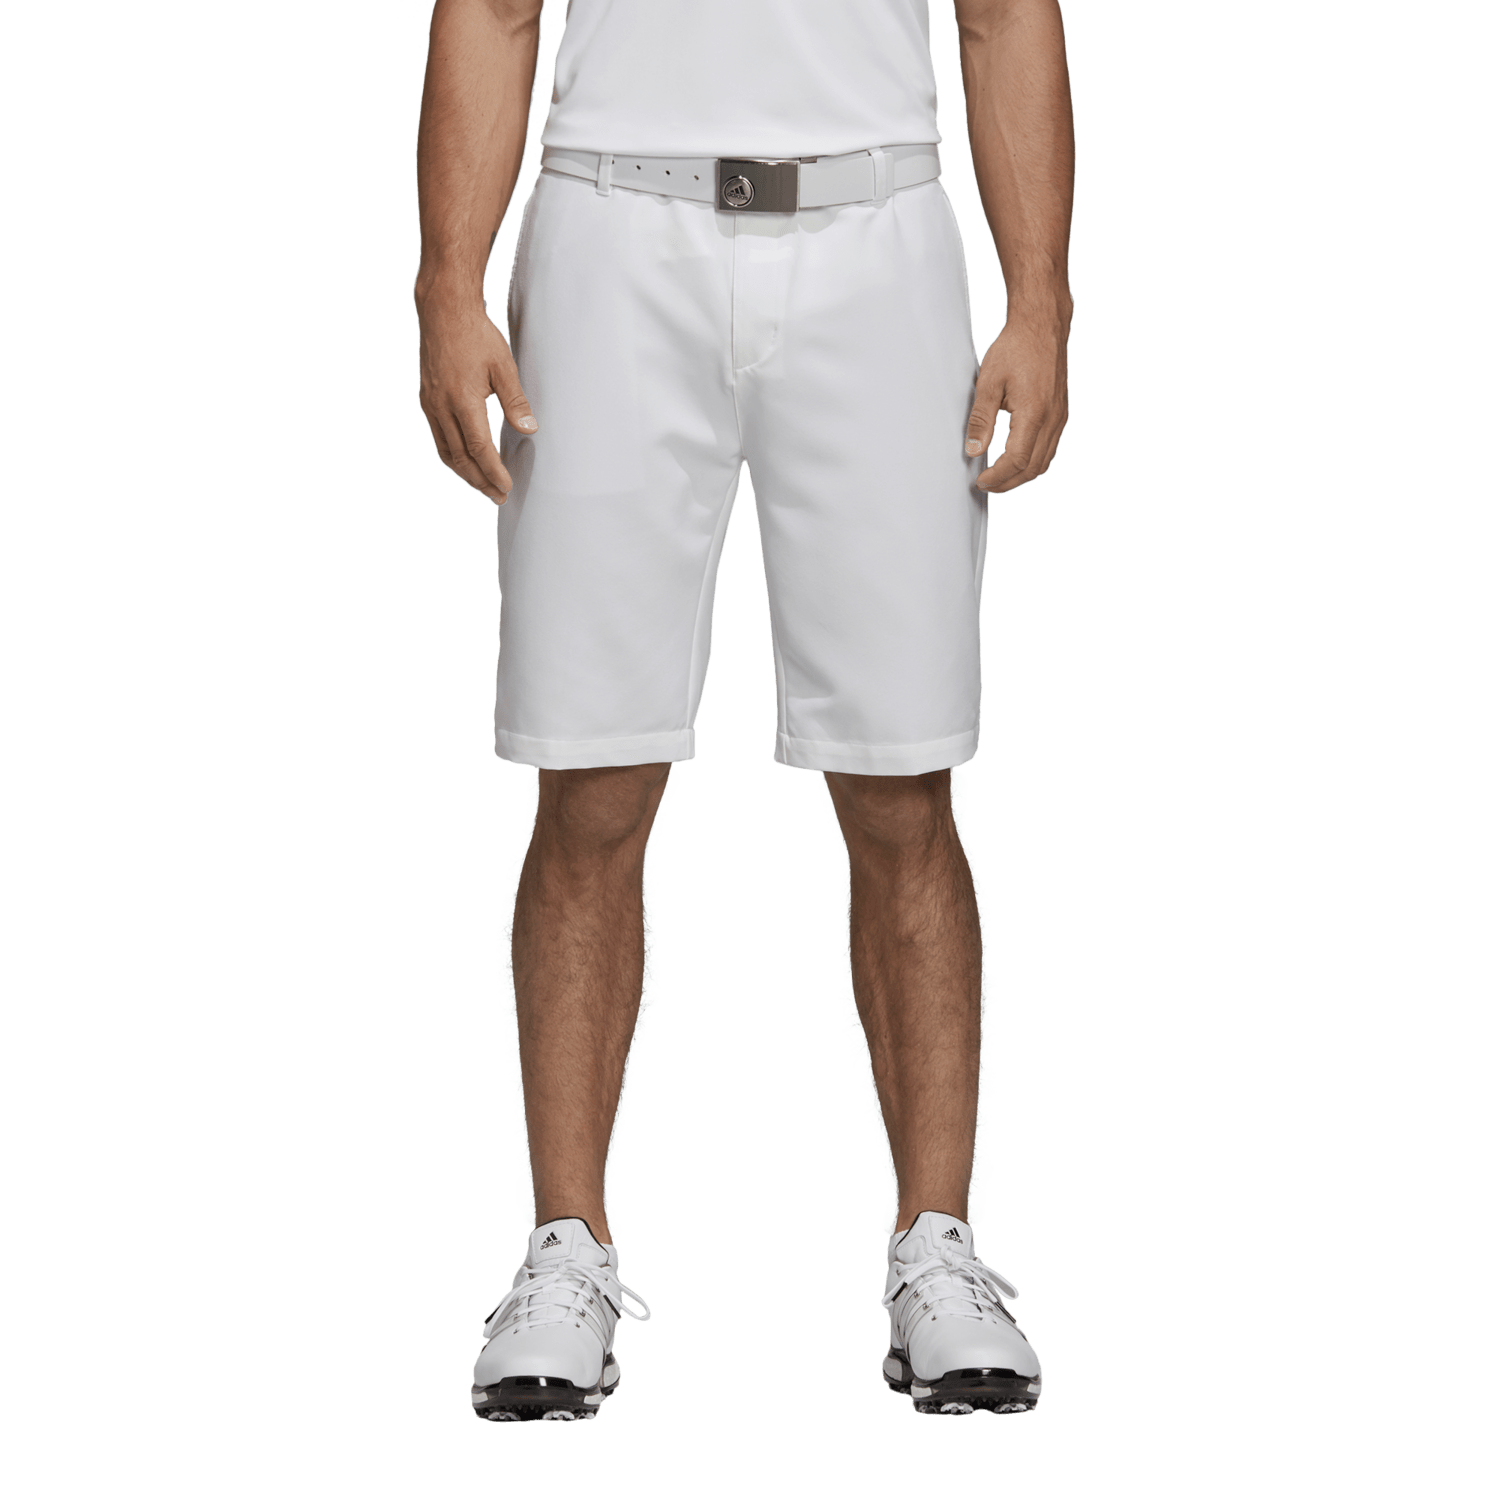 adidas men's 365 golf shorts